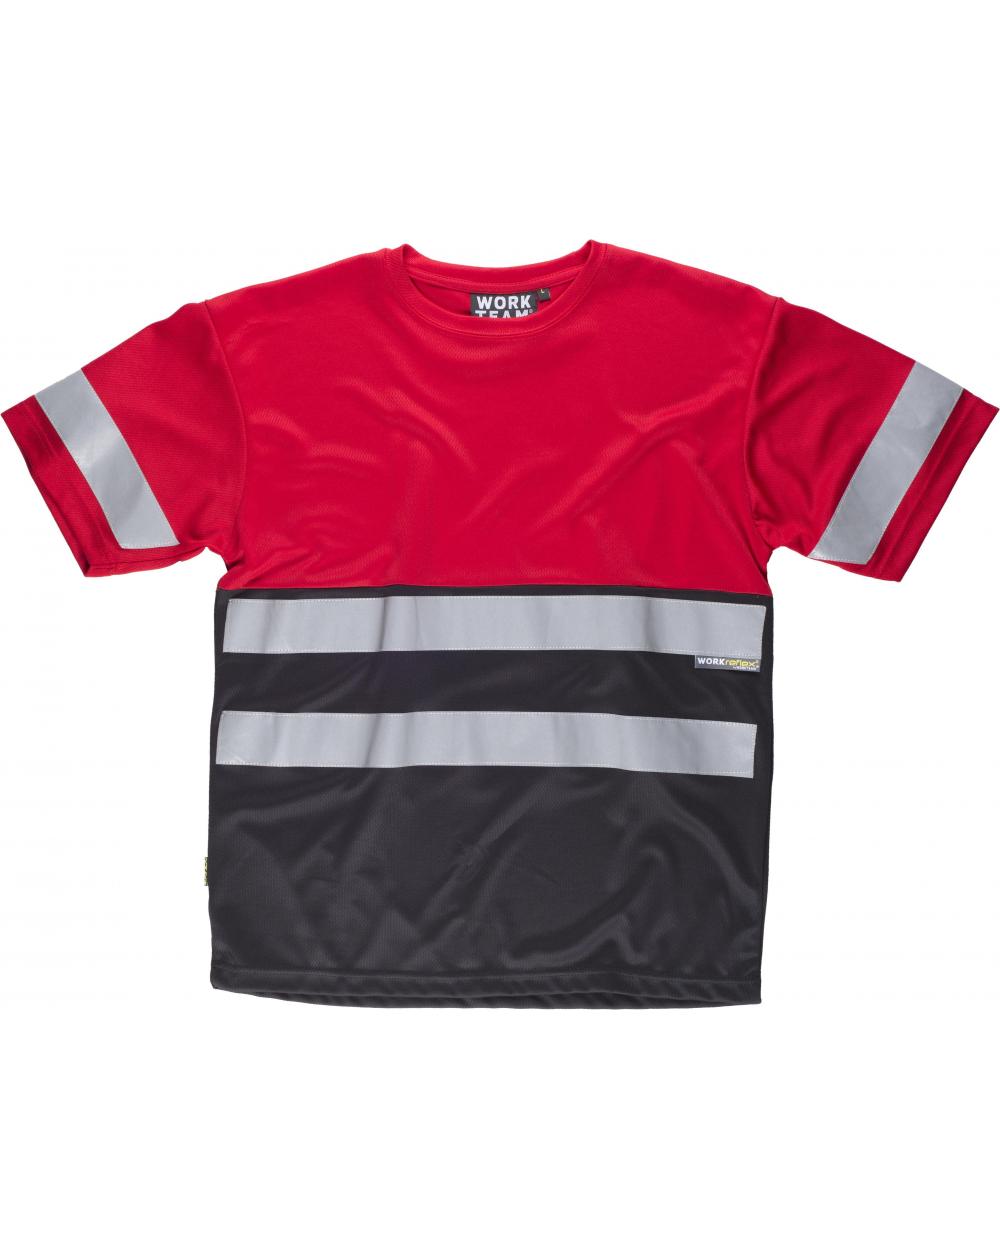 Comprar Camiseta transpirable C3940 Rojo+Negro workteam delante